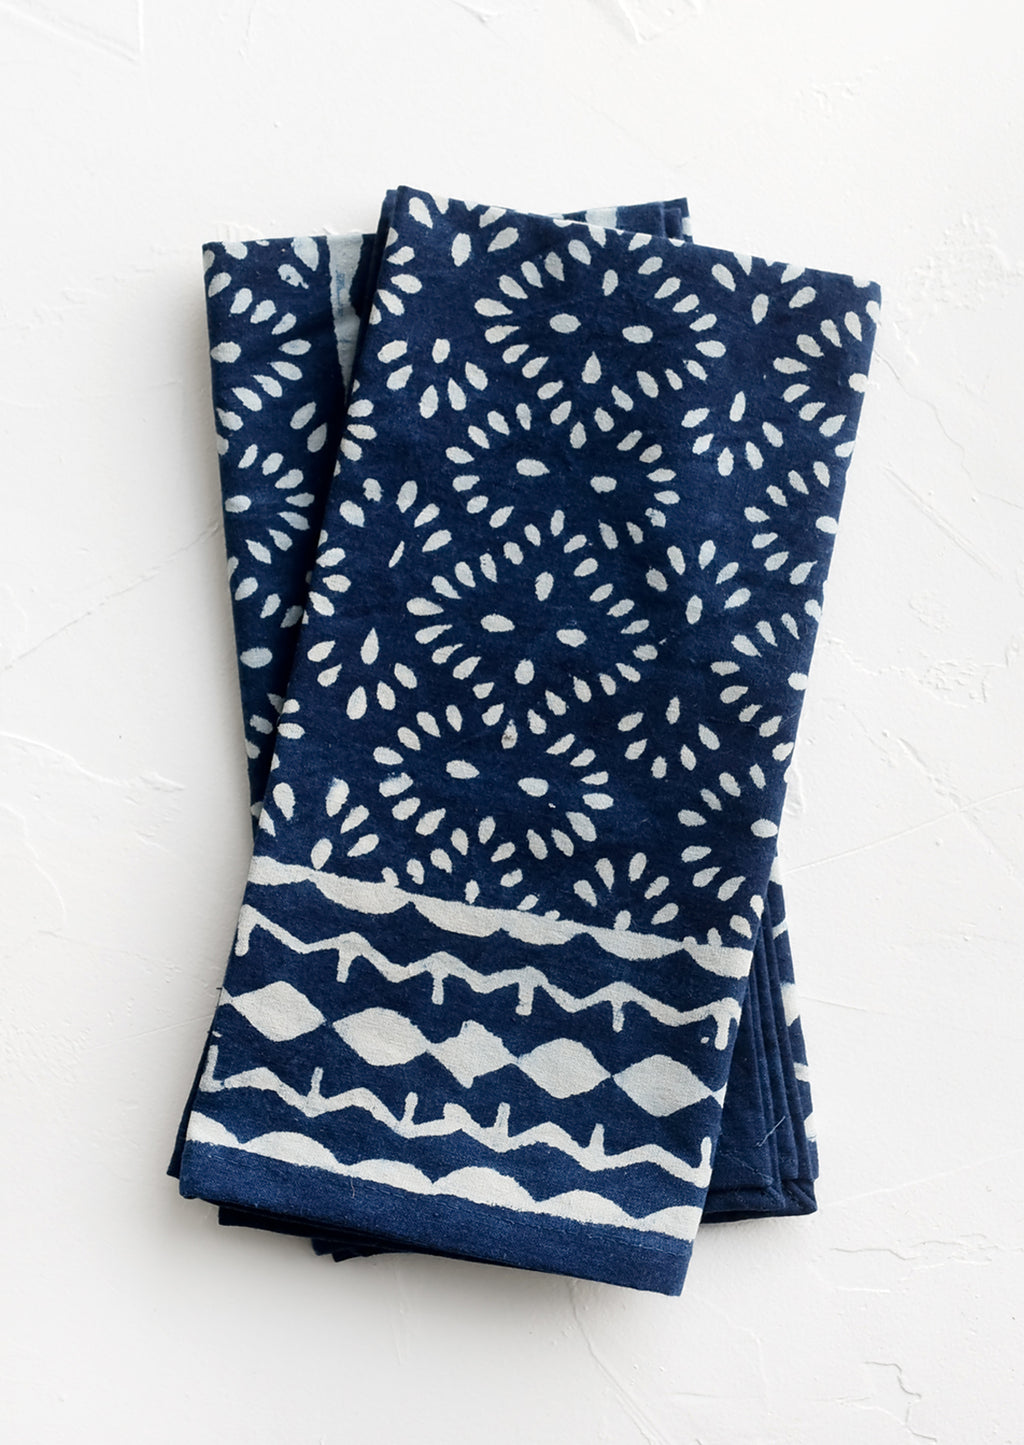 1: A pair of indigo napkins with white block printed pattern.